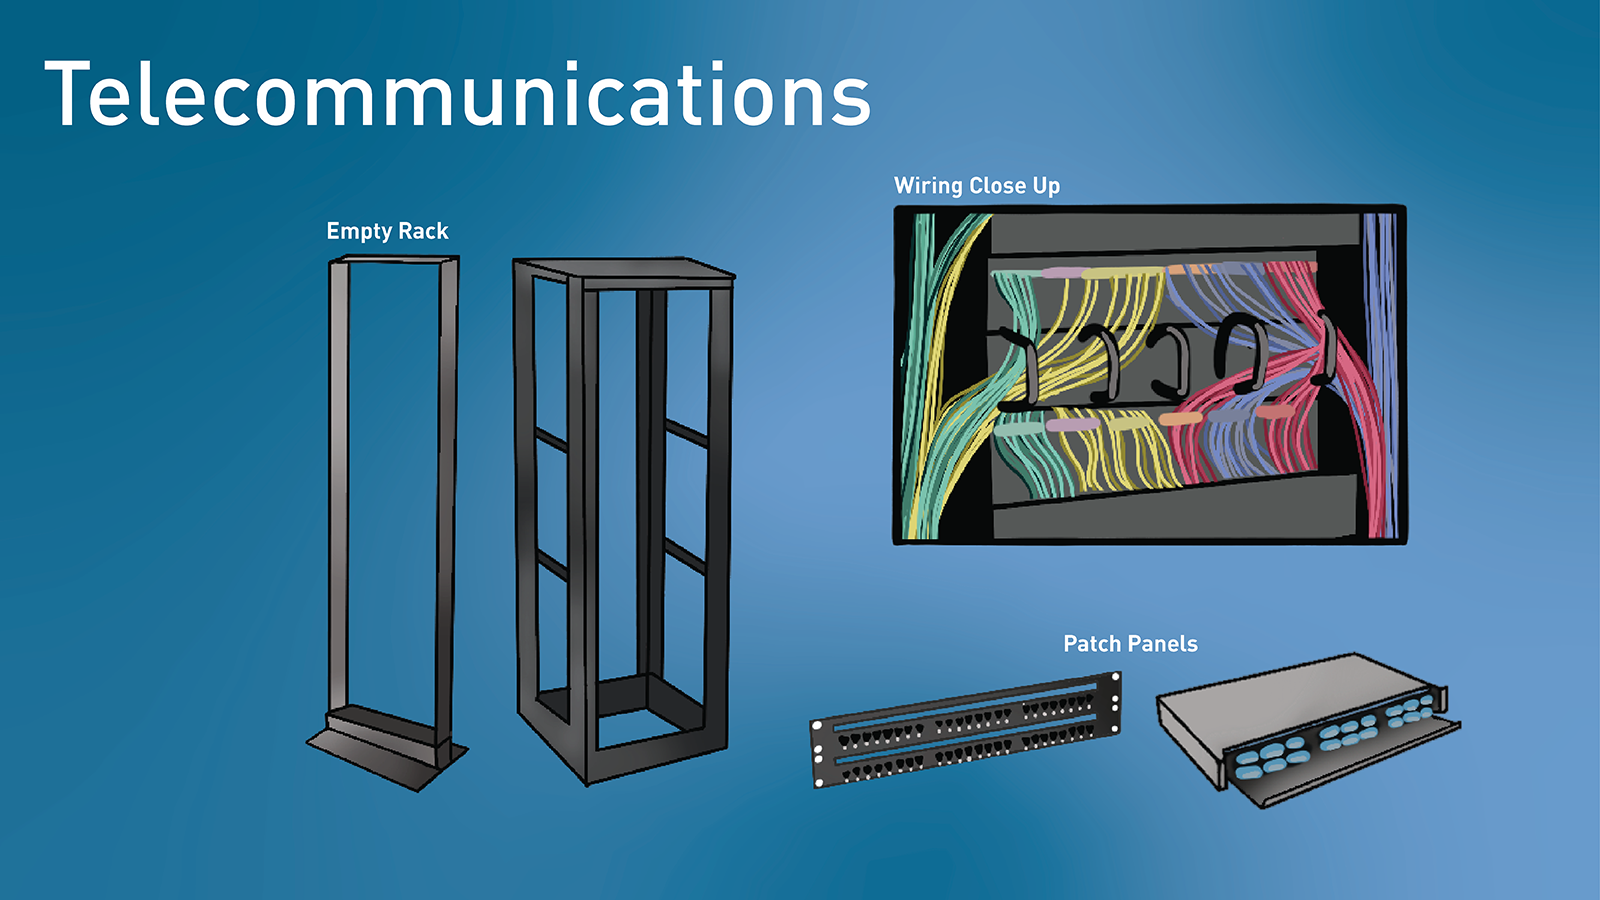 Illustration of Telecommunications equipment